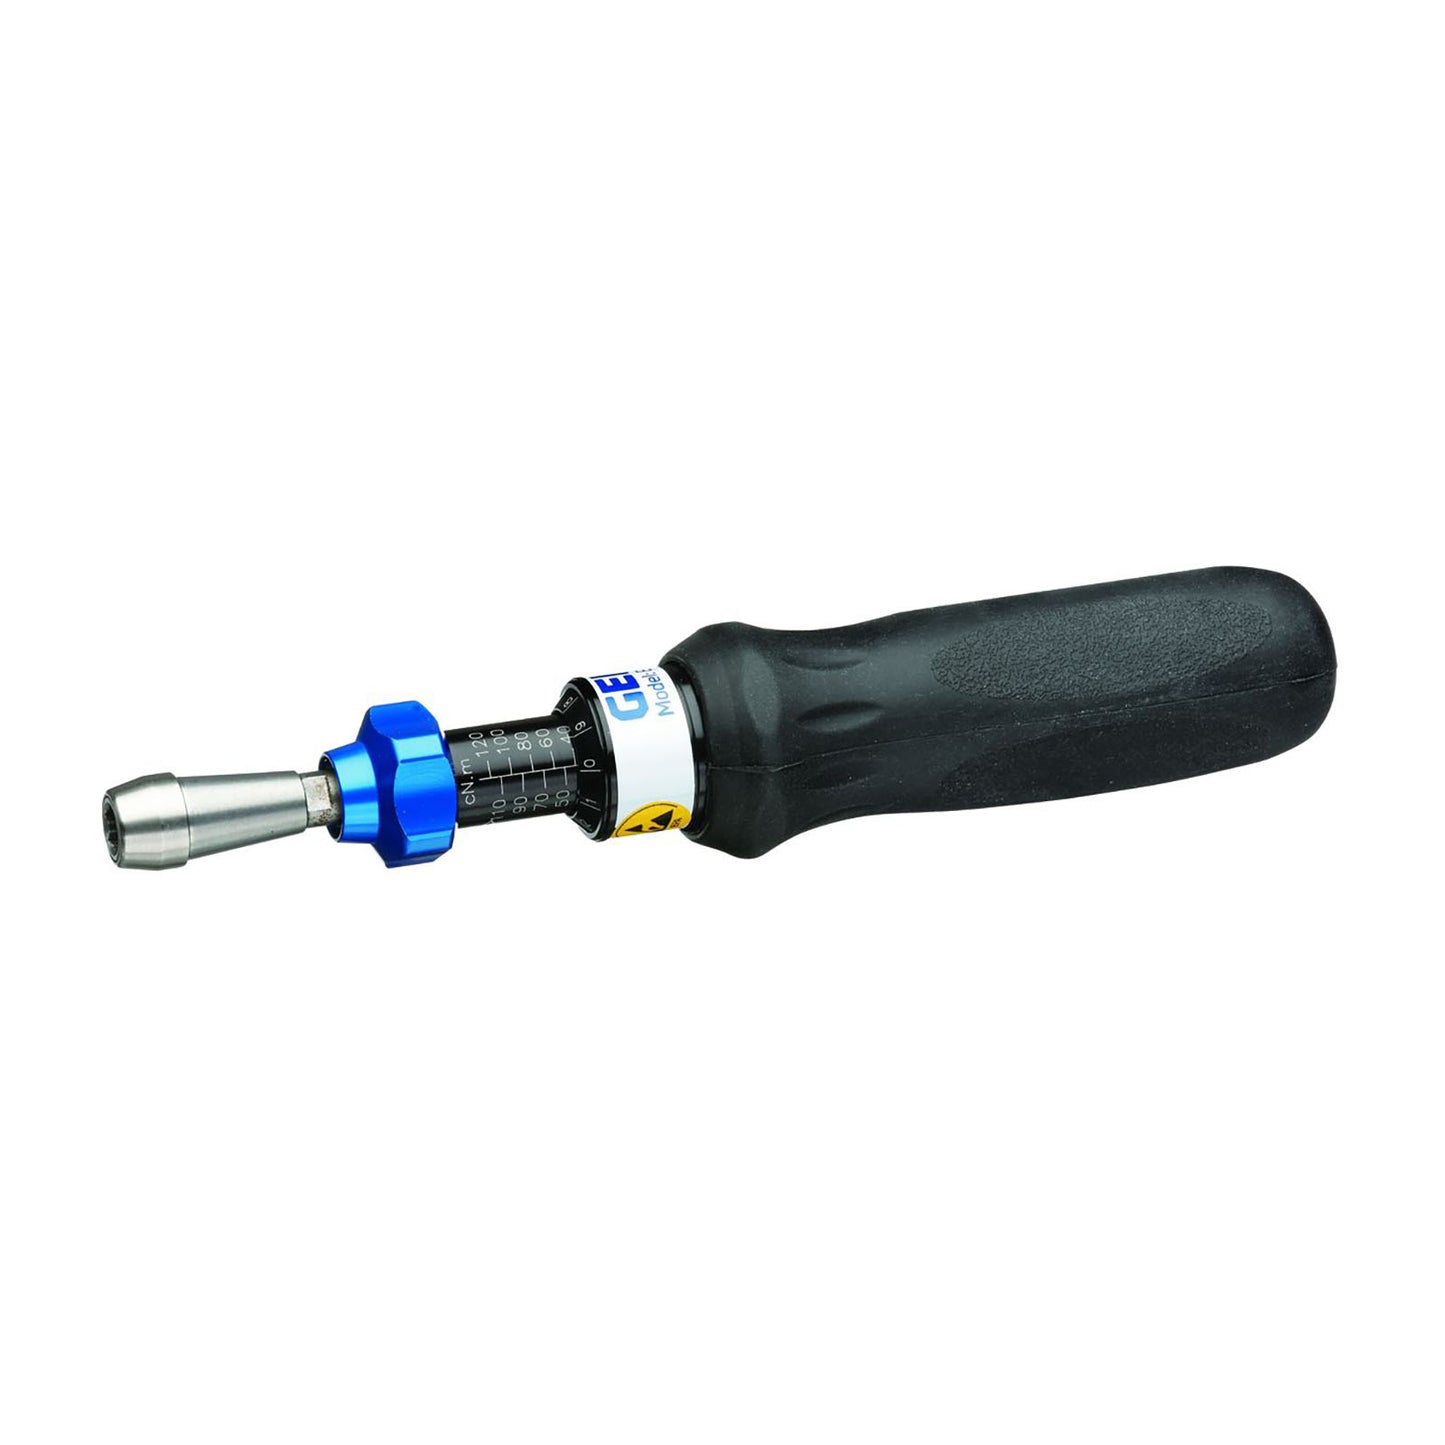 GEDORE QSA 60 FH - Torque screwdriver 1/4" 12-60 ozf.in 060740 (2296098)